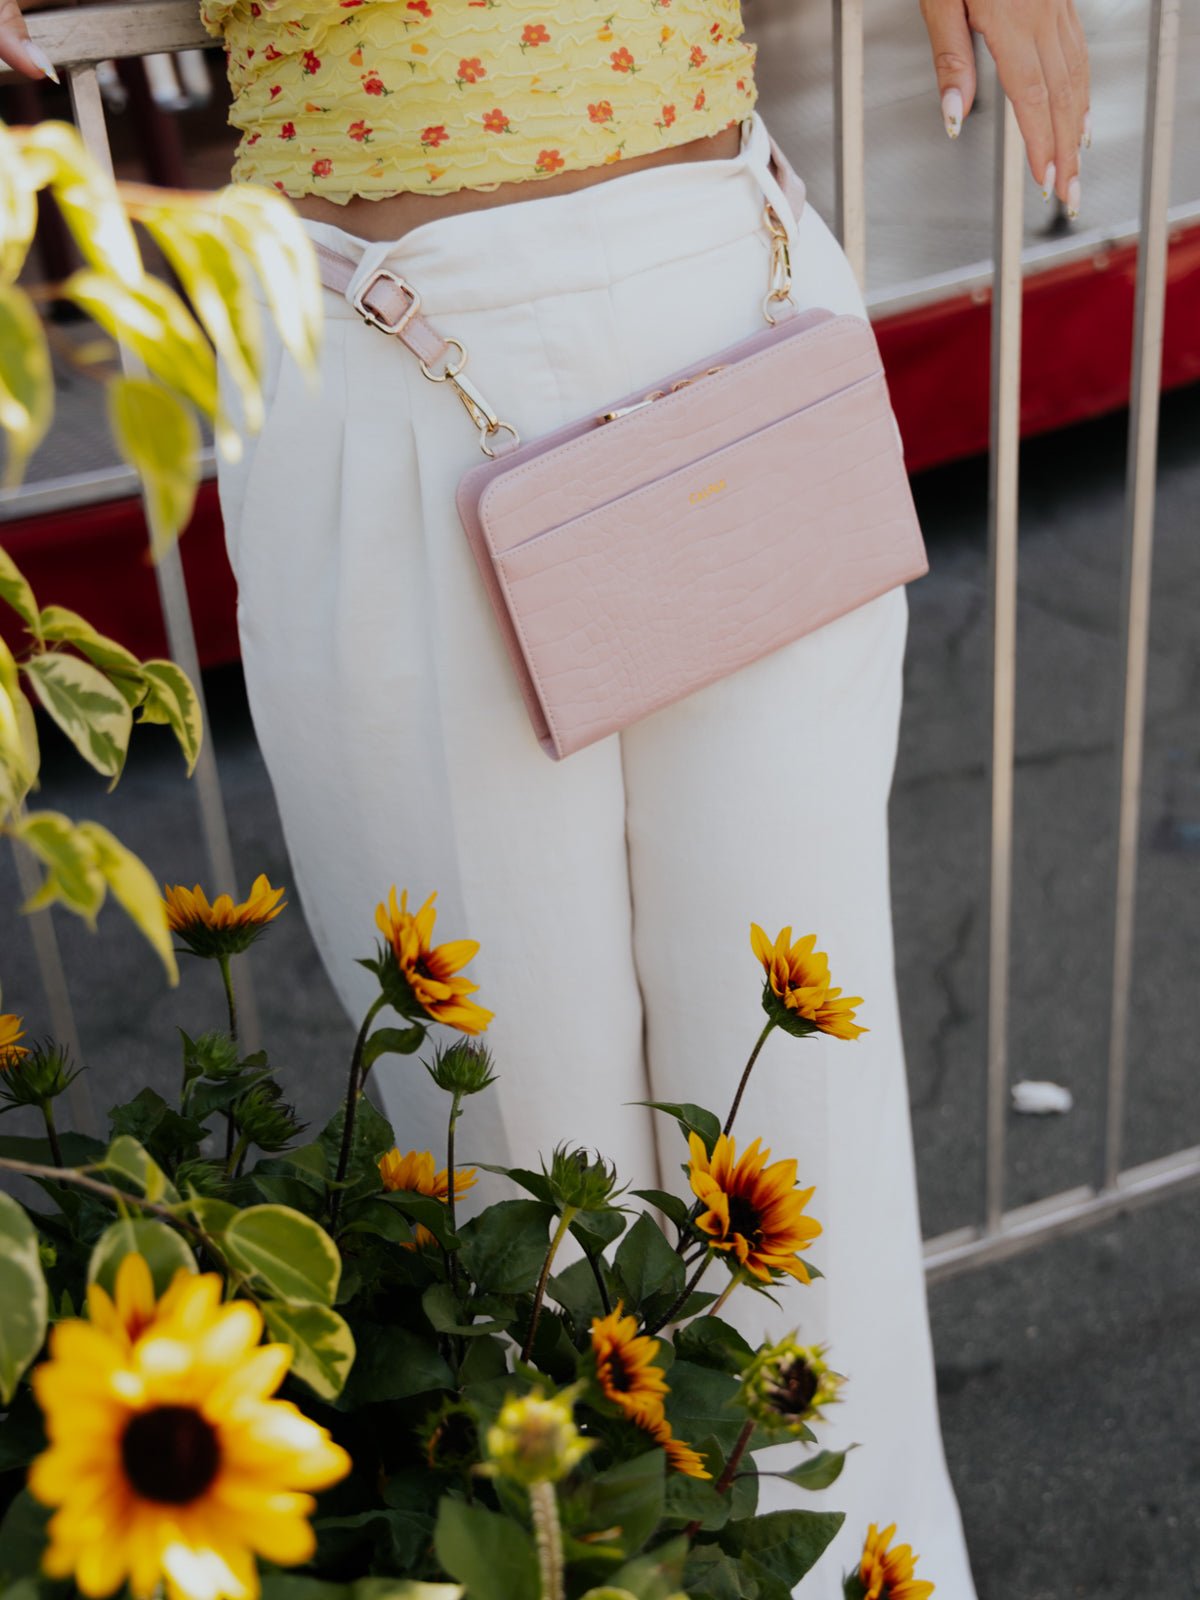 Model leaning against fence wearing pink CALPAK Croc Wallet as waist bag